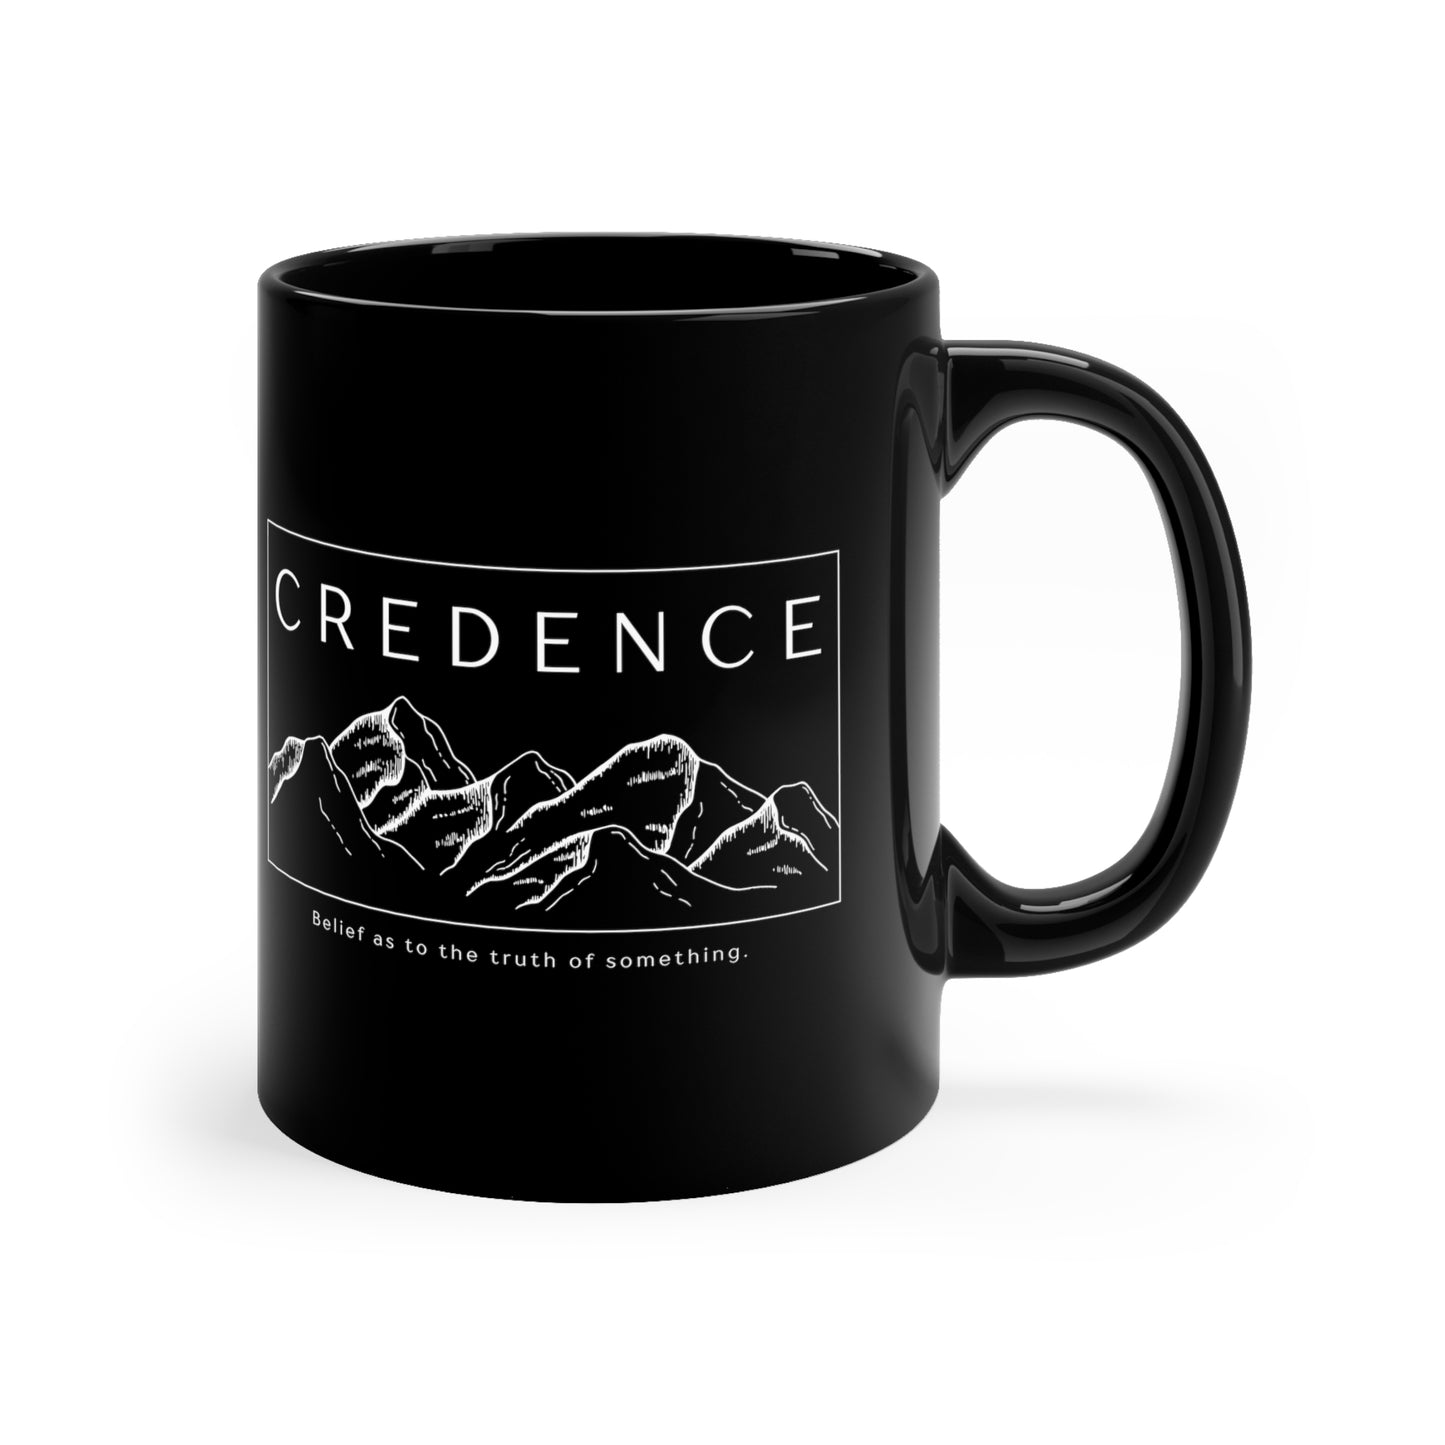 Credence Mug